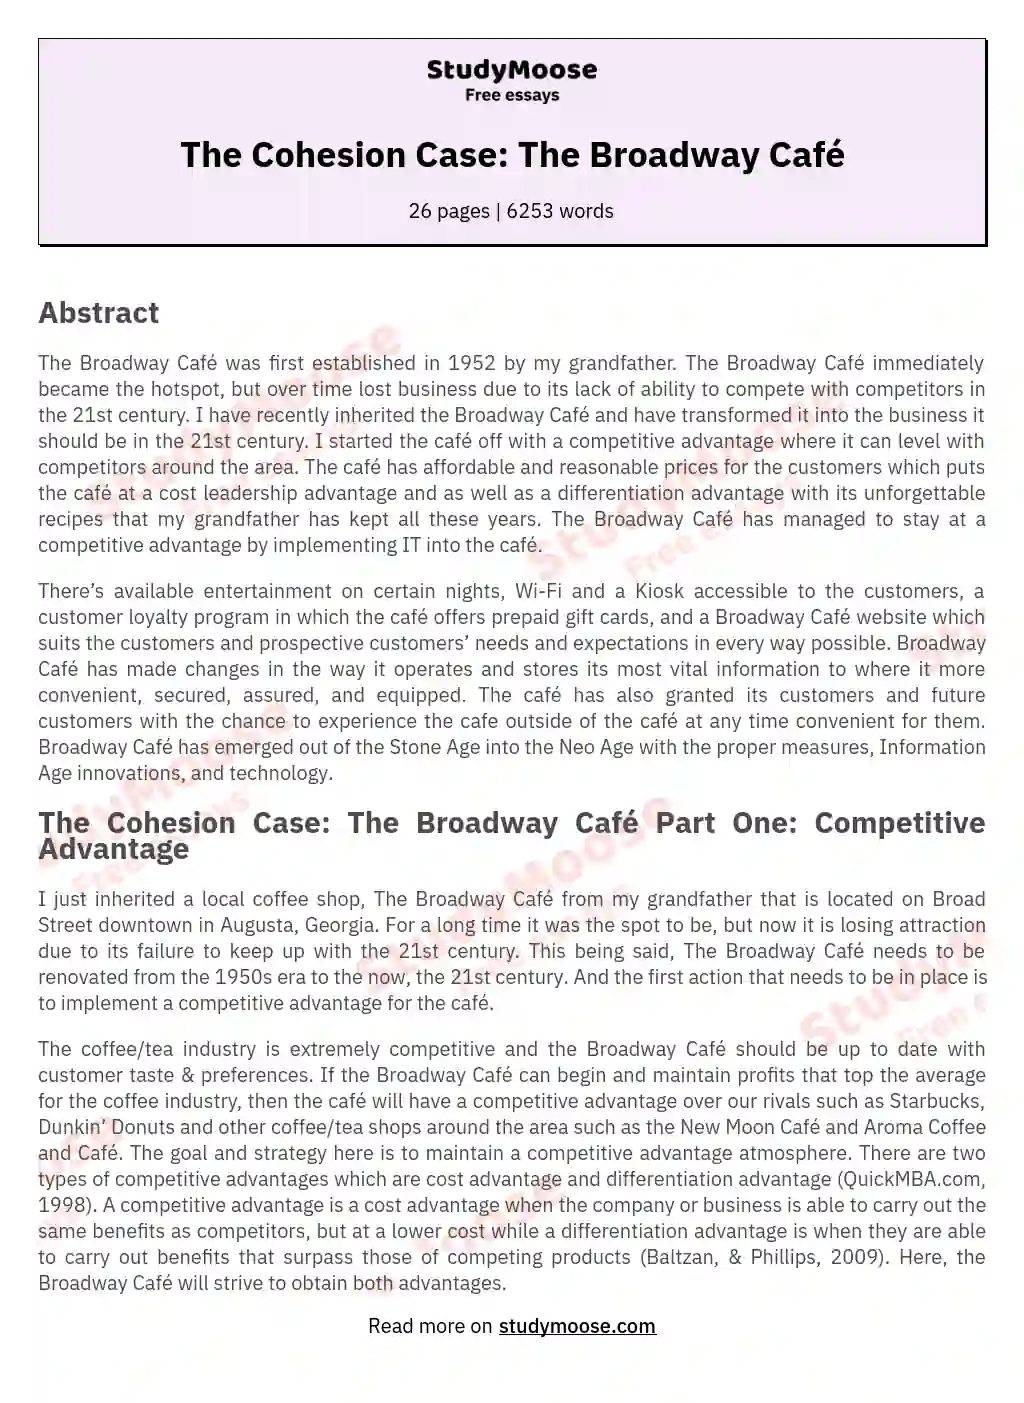 The Cohesion Case: The Broadway Café